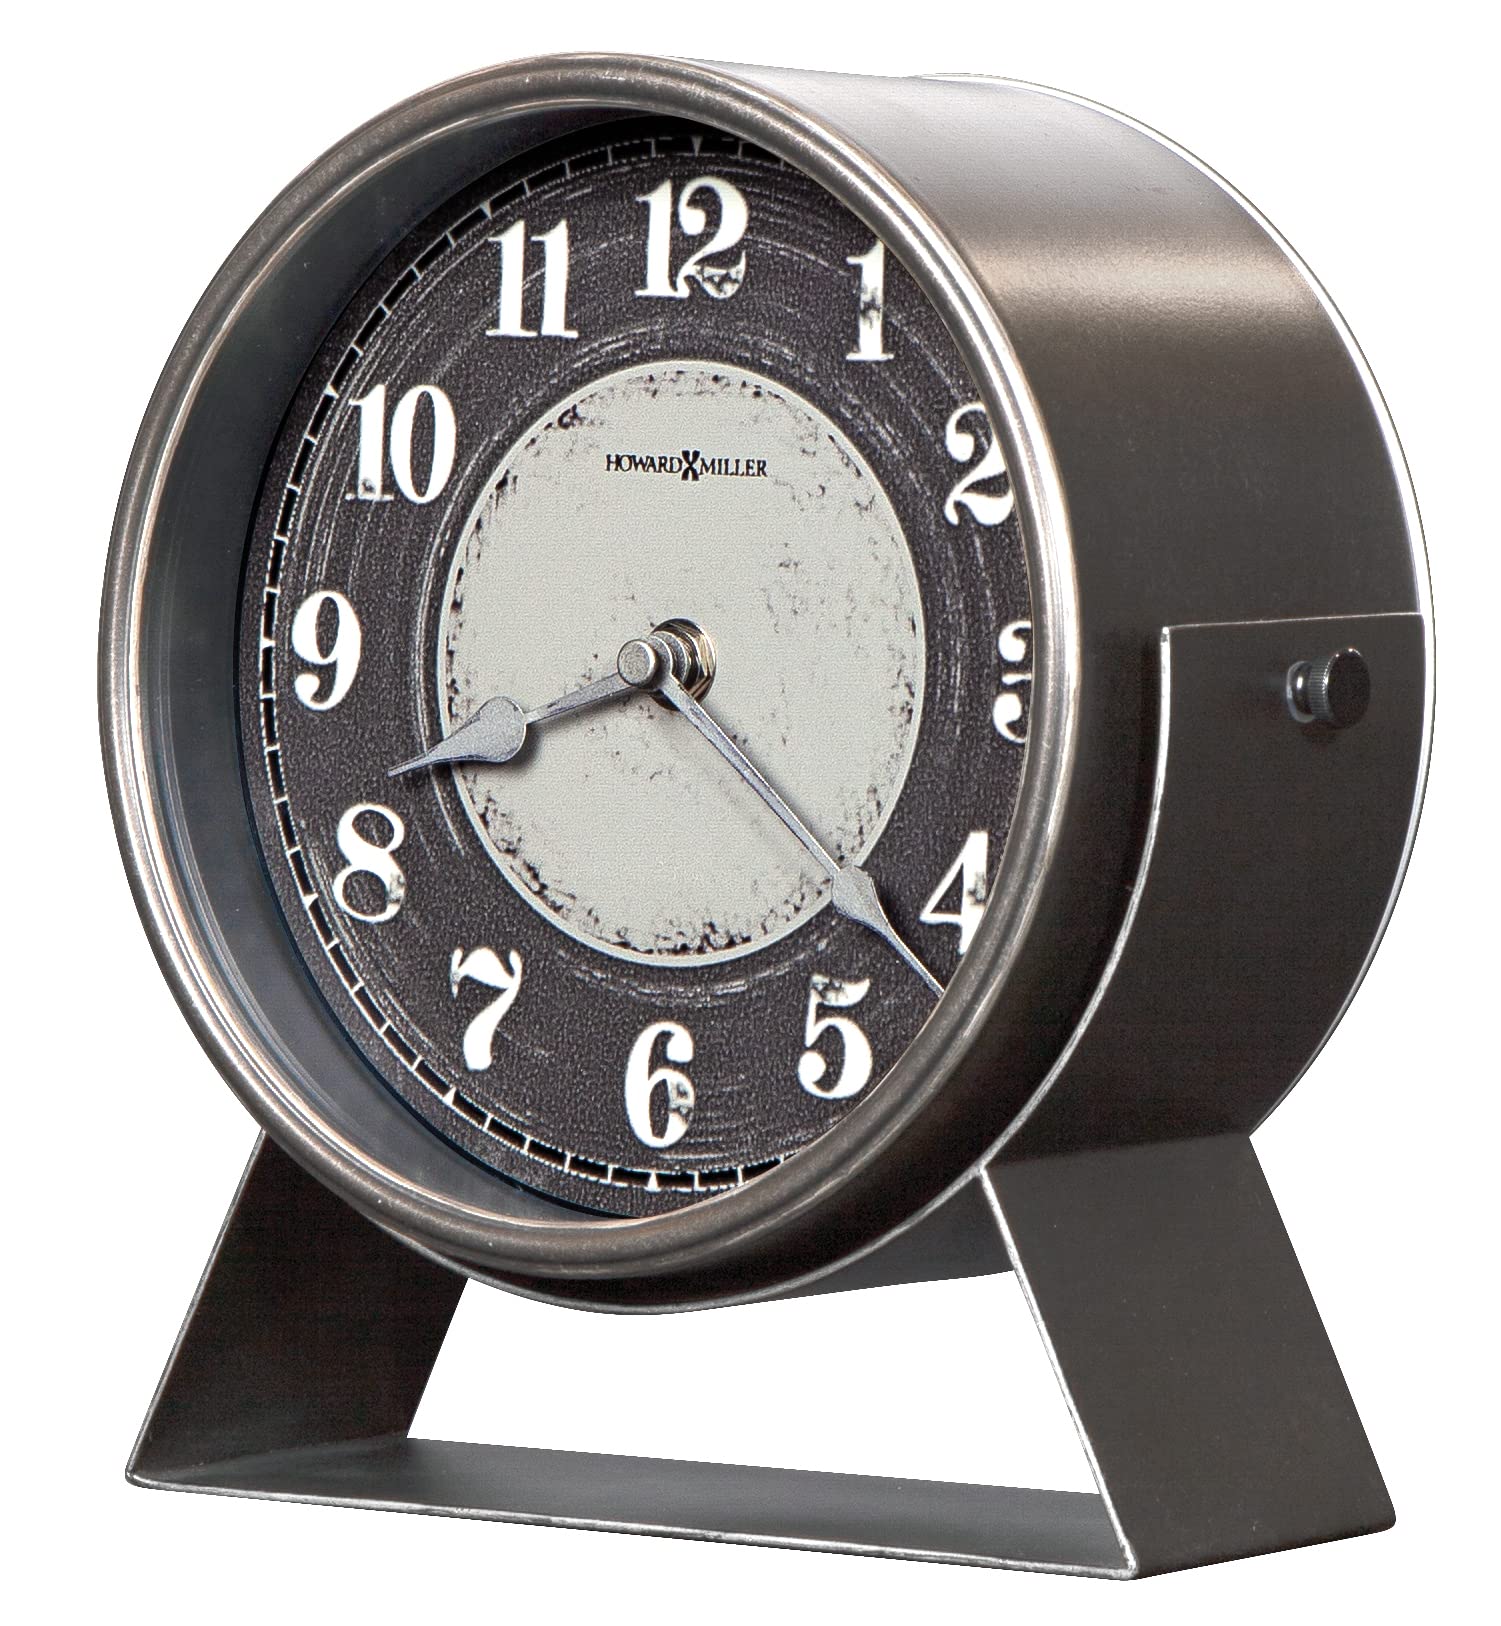 Howard Miller Bonners Ferry Bracket Mantel Clock 547-639 – Windsor Cherry Finish, Classic Bracket Timepiece, Vintage Home Decor, Key-Wound, Single-Chime Movement